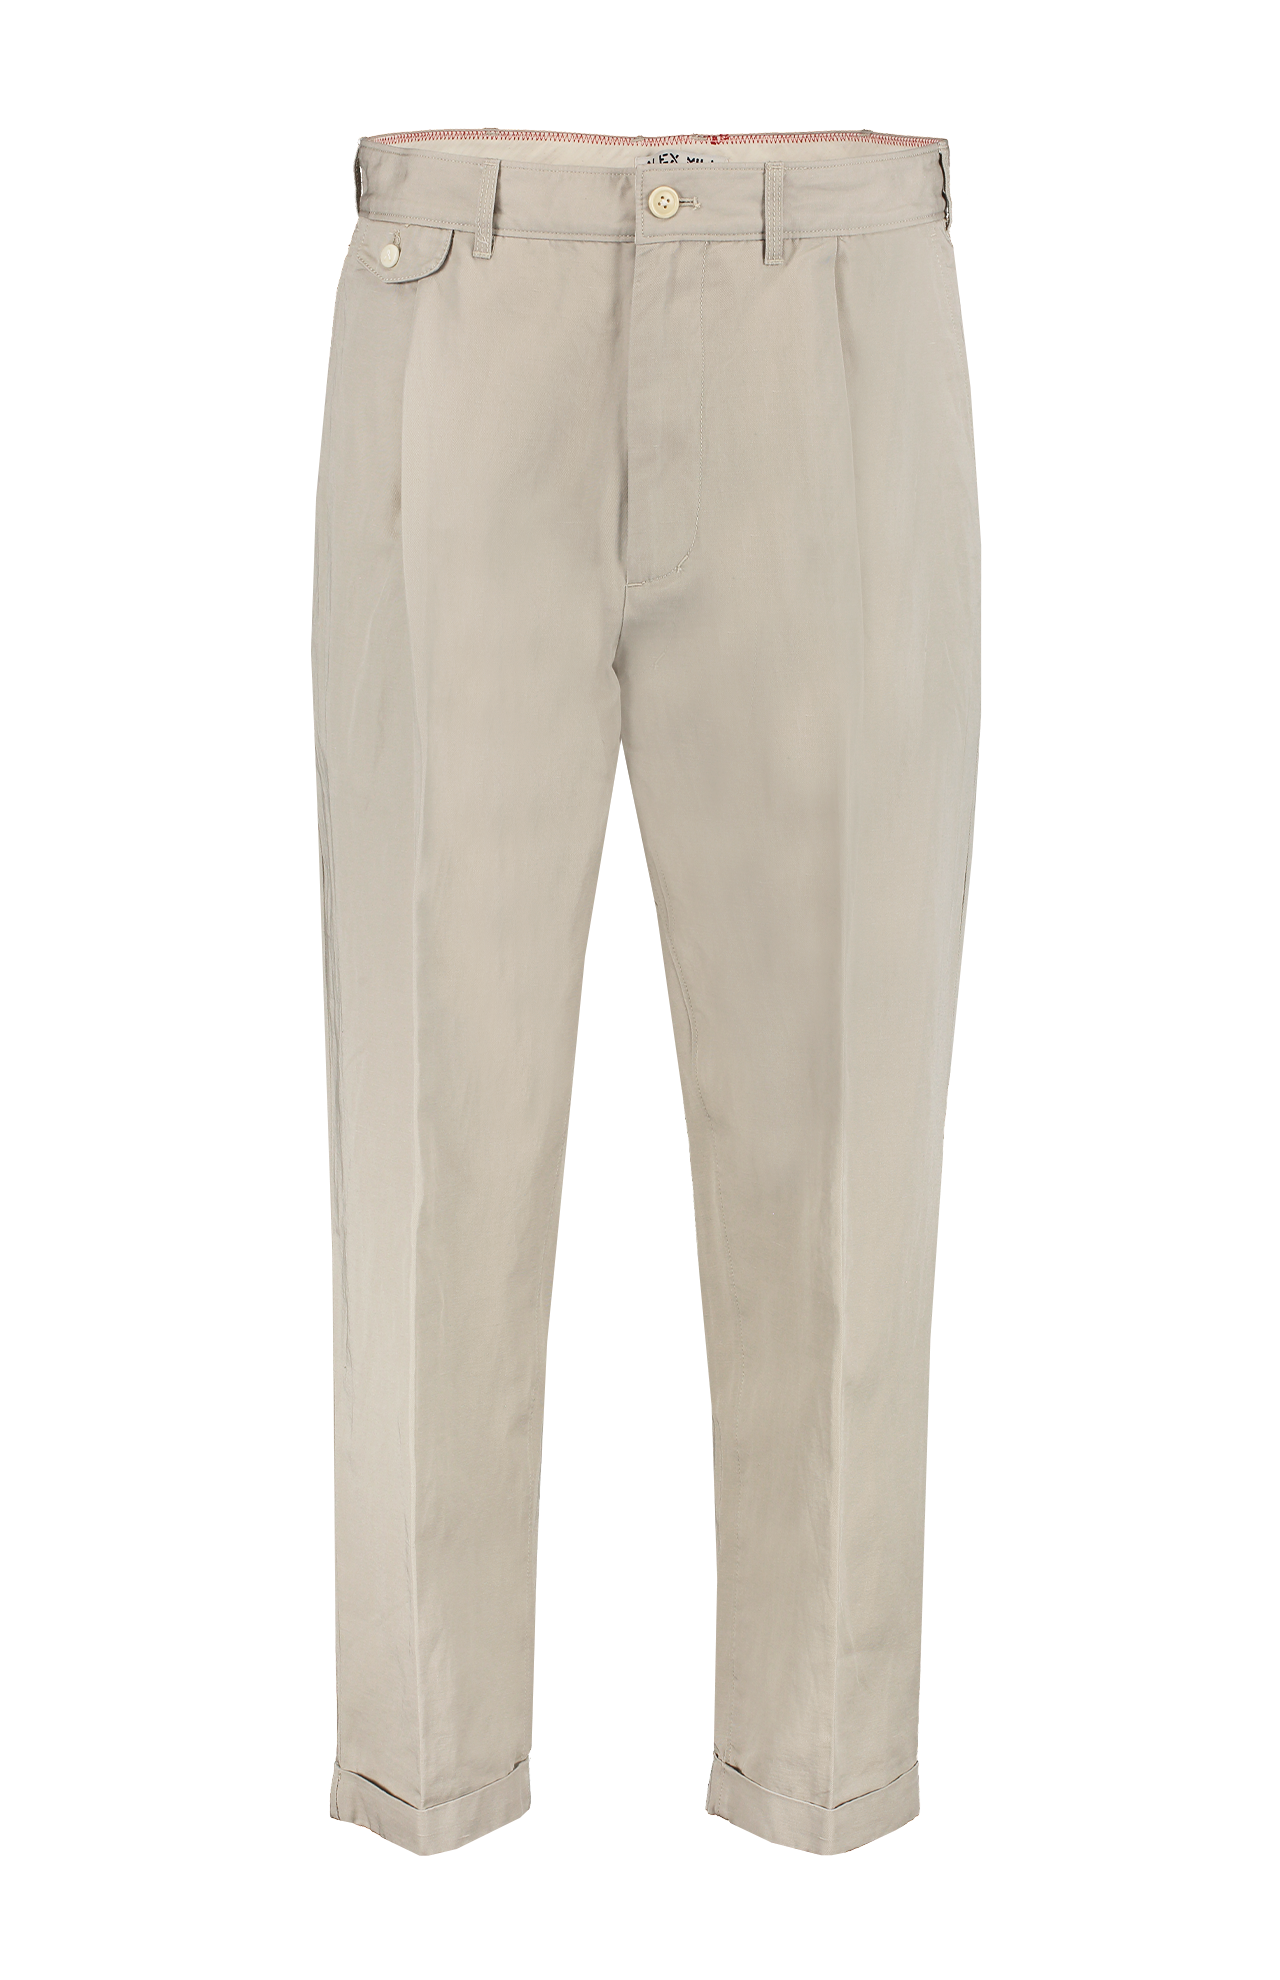 Alex Mill Men's Standard Pleated Pant in Cotton Linen | A.K. Rikk's